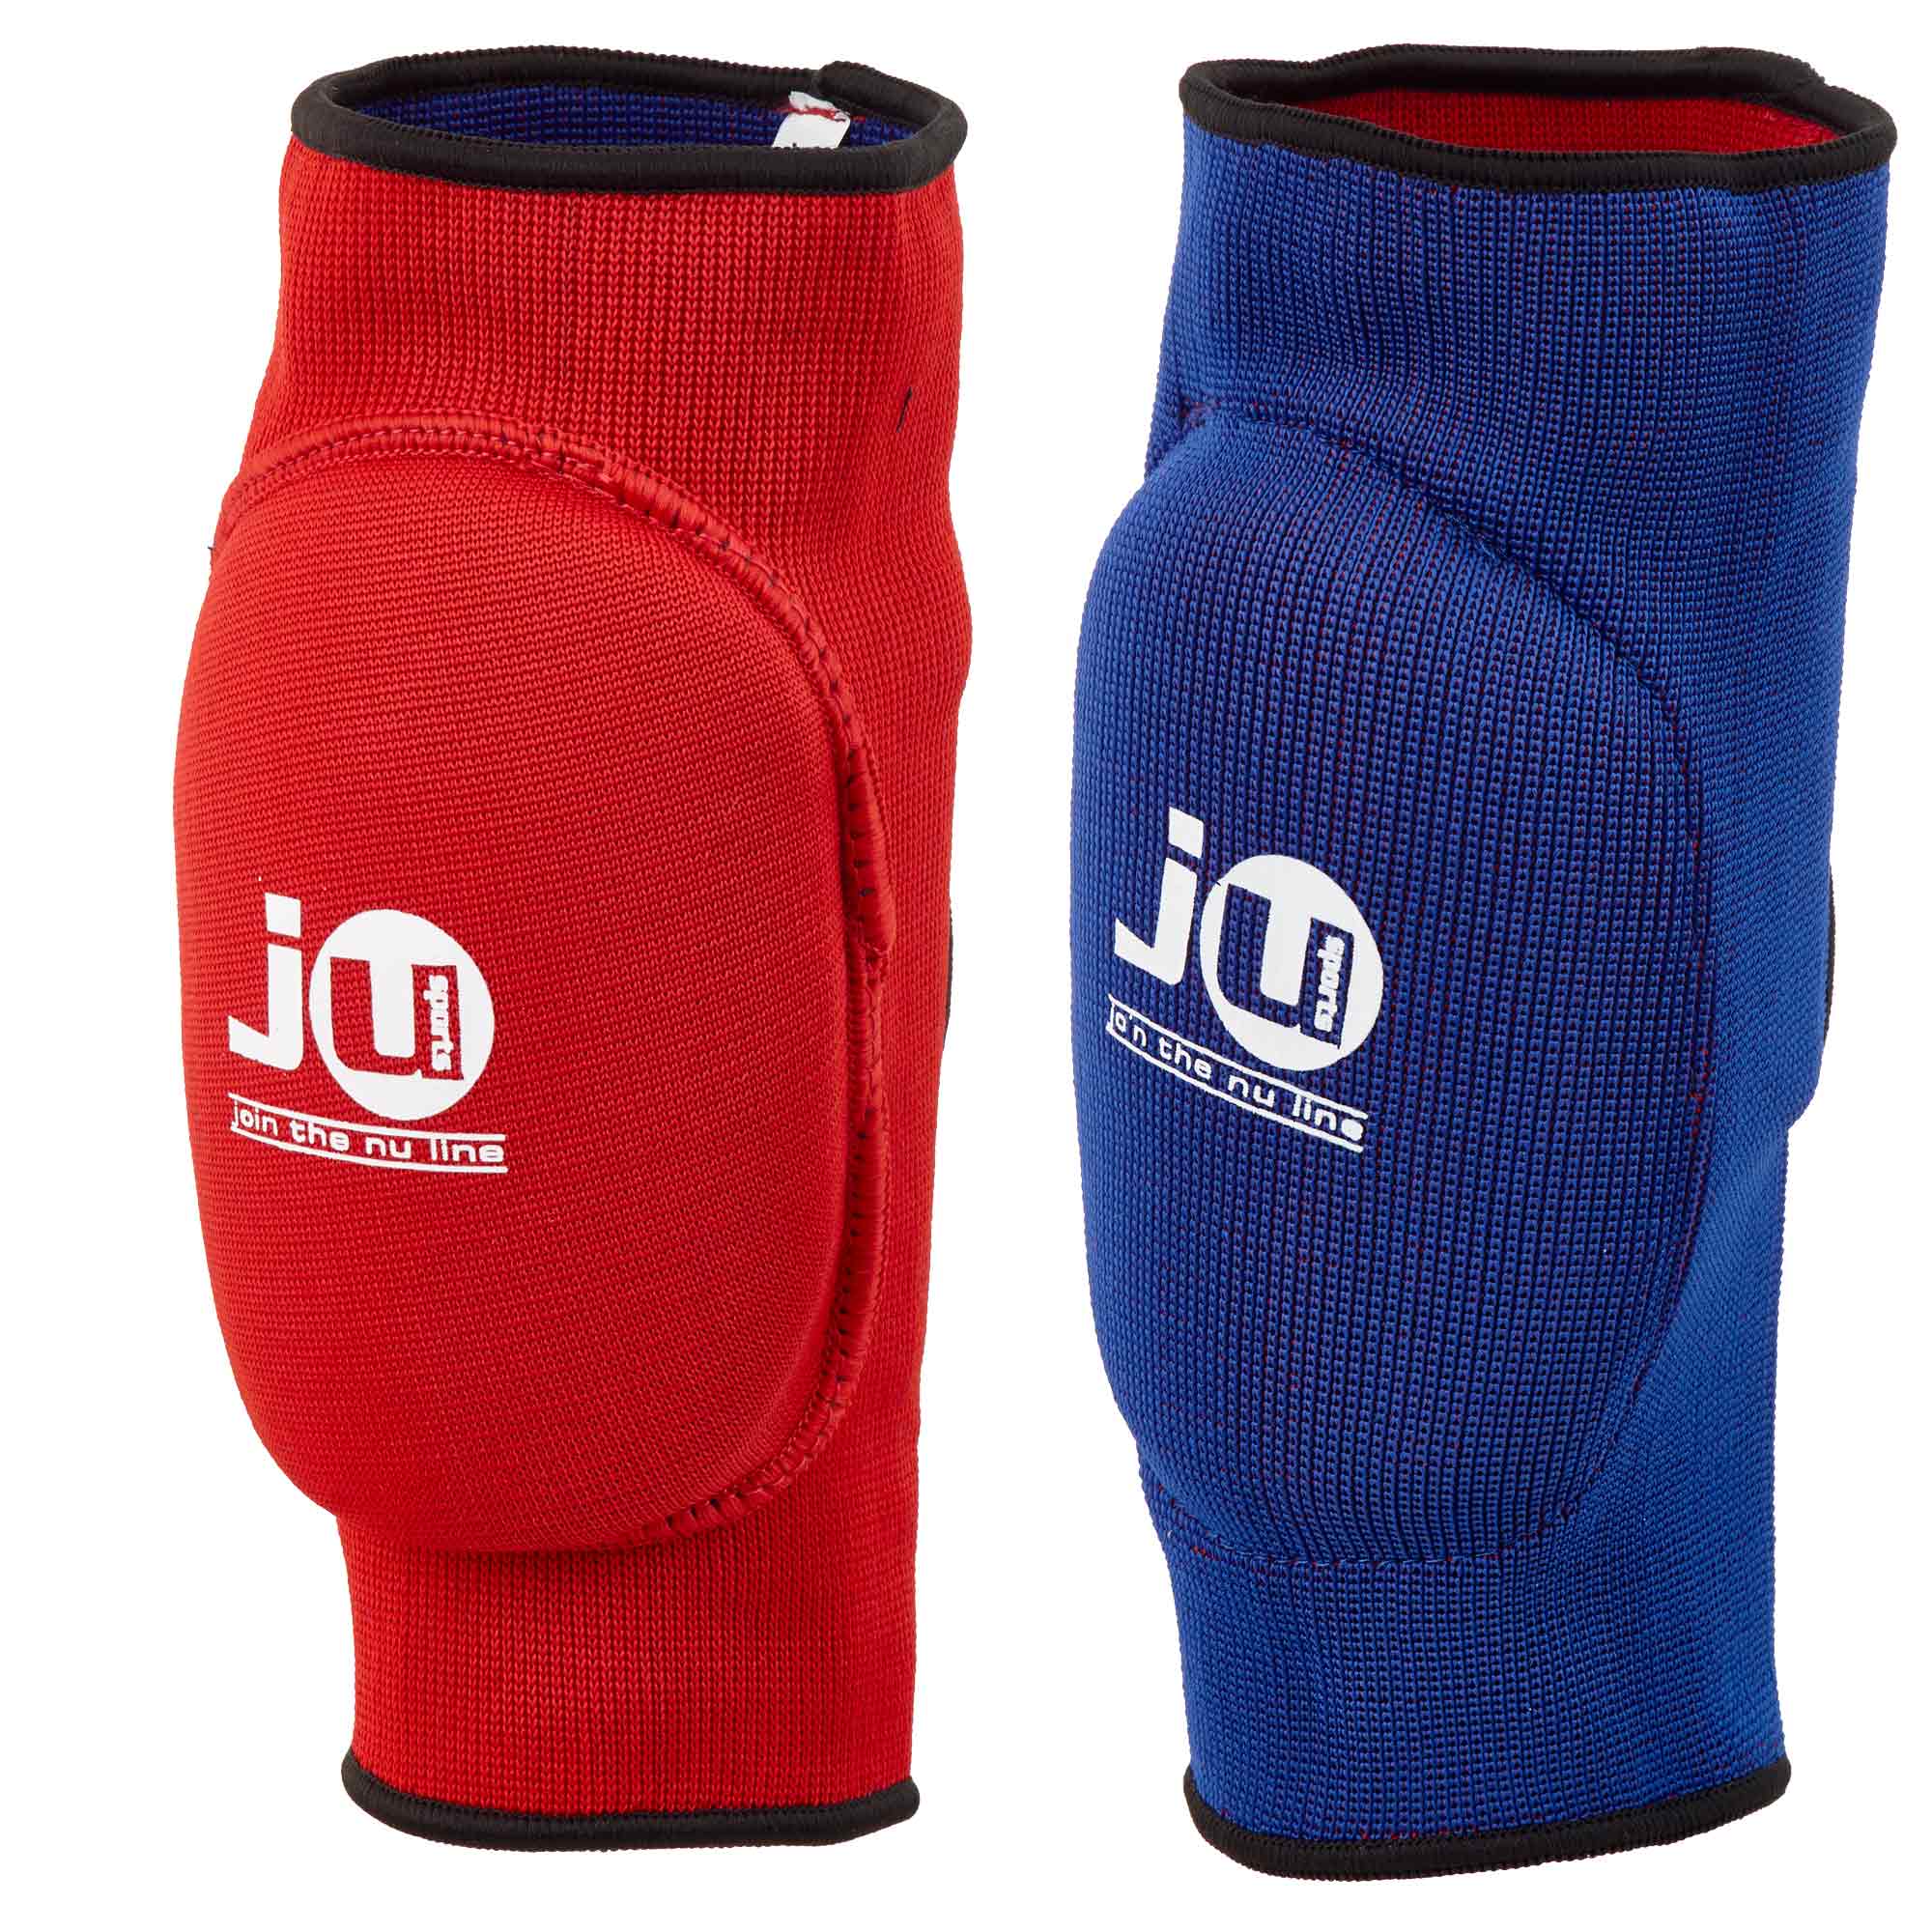 Ju-Sports Two-Tone Knee Pads